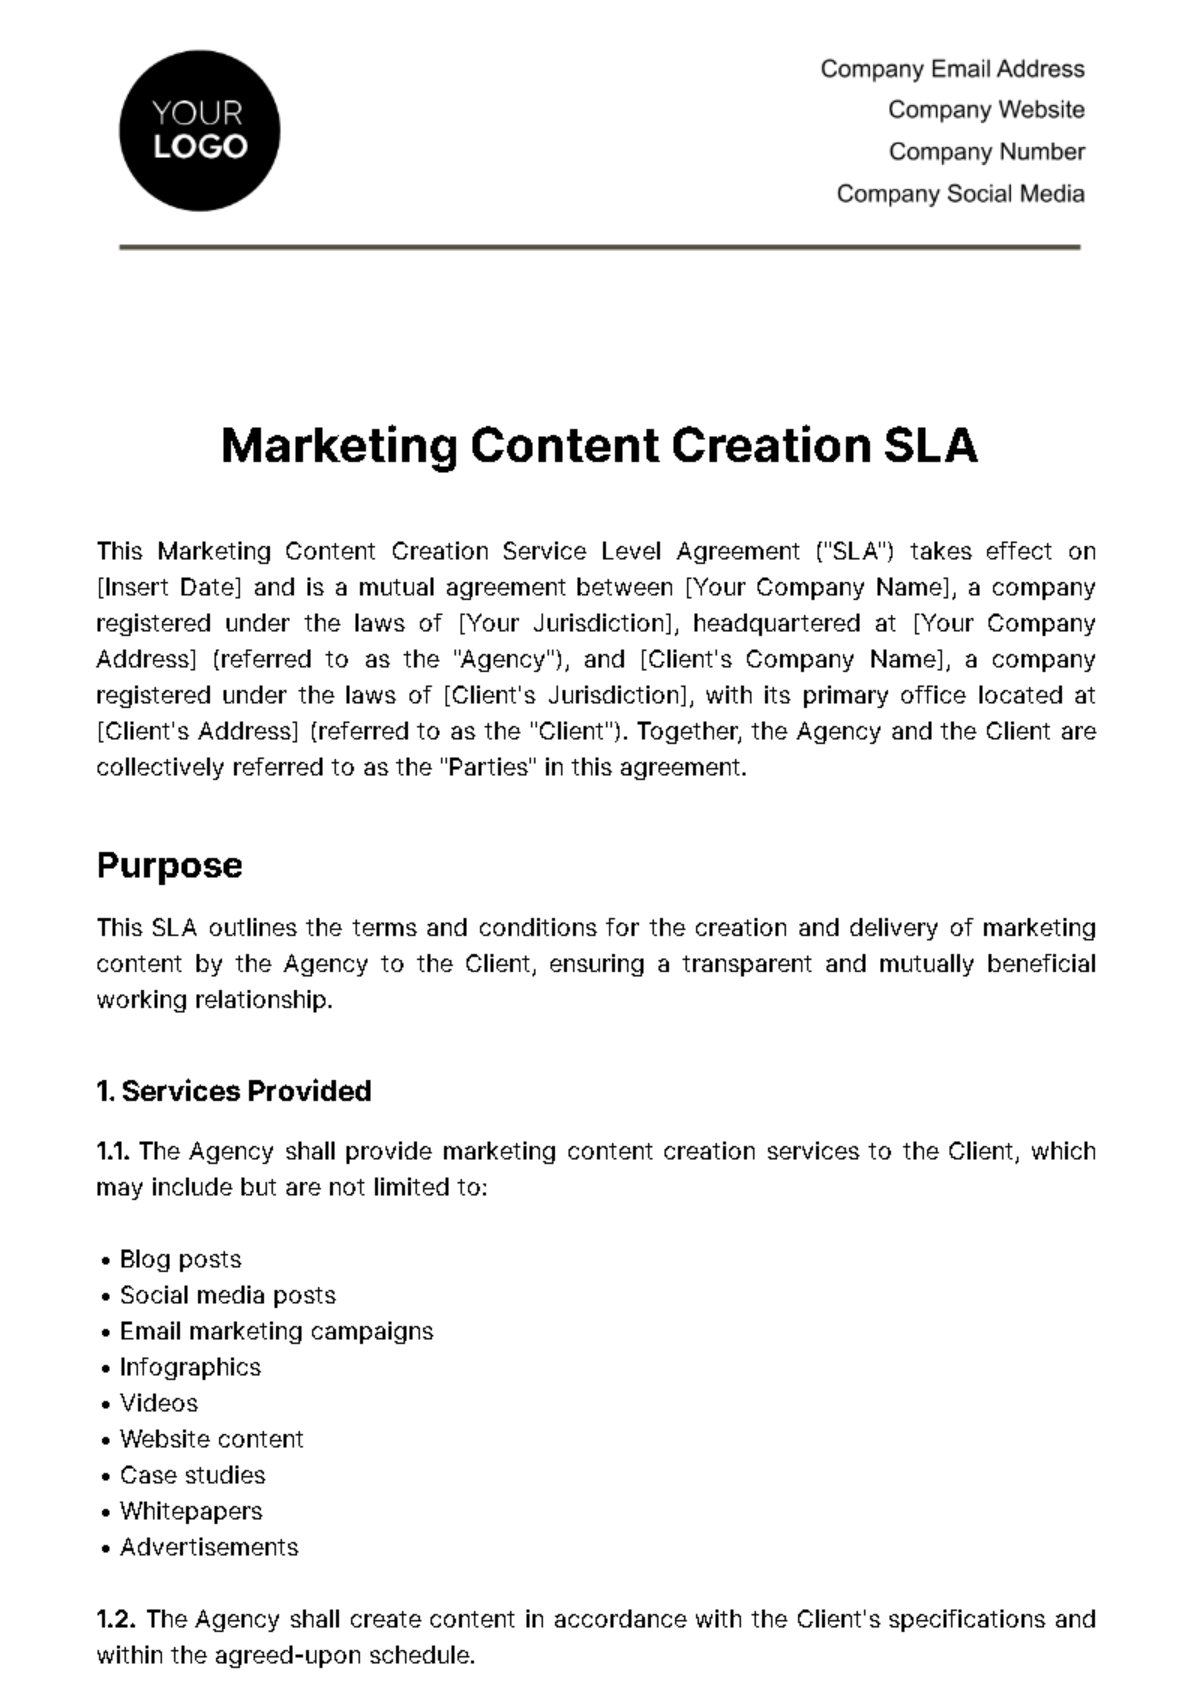 Marketing Content Creation SLA Template